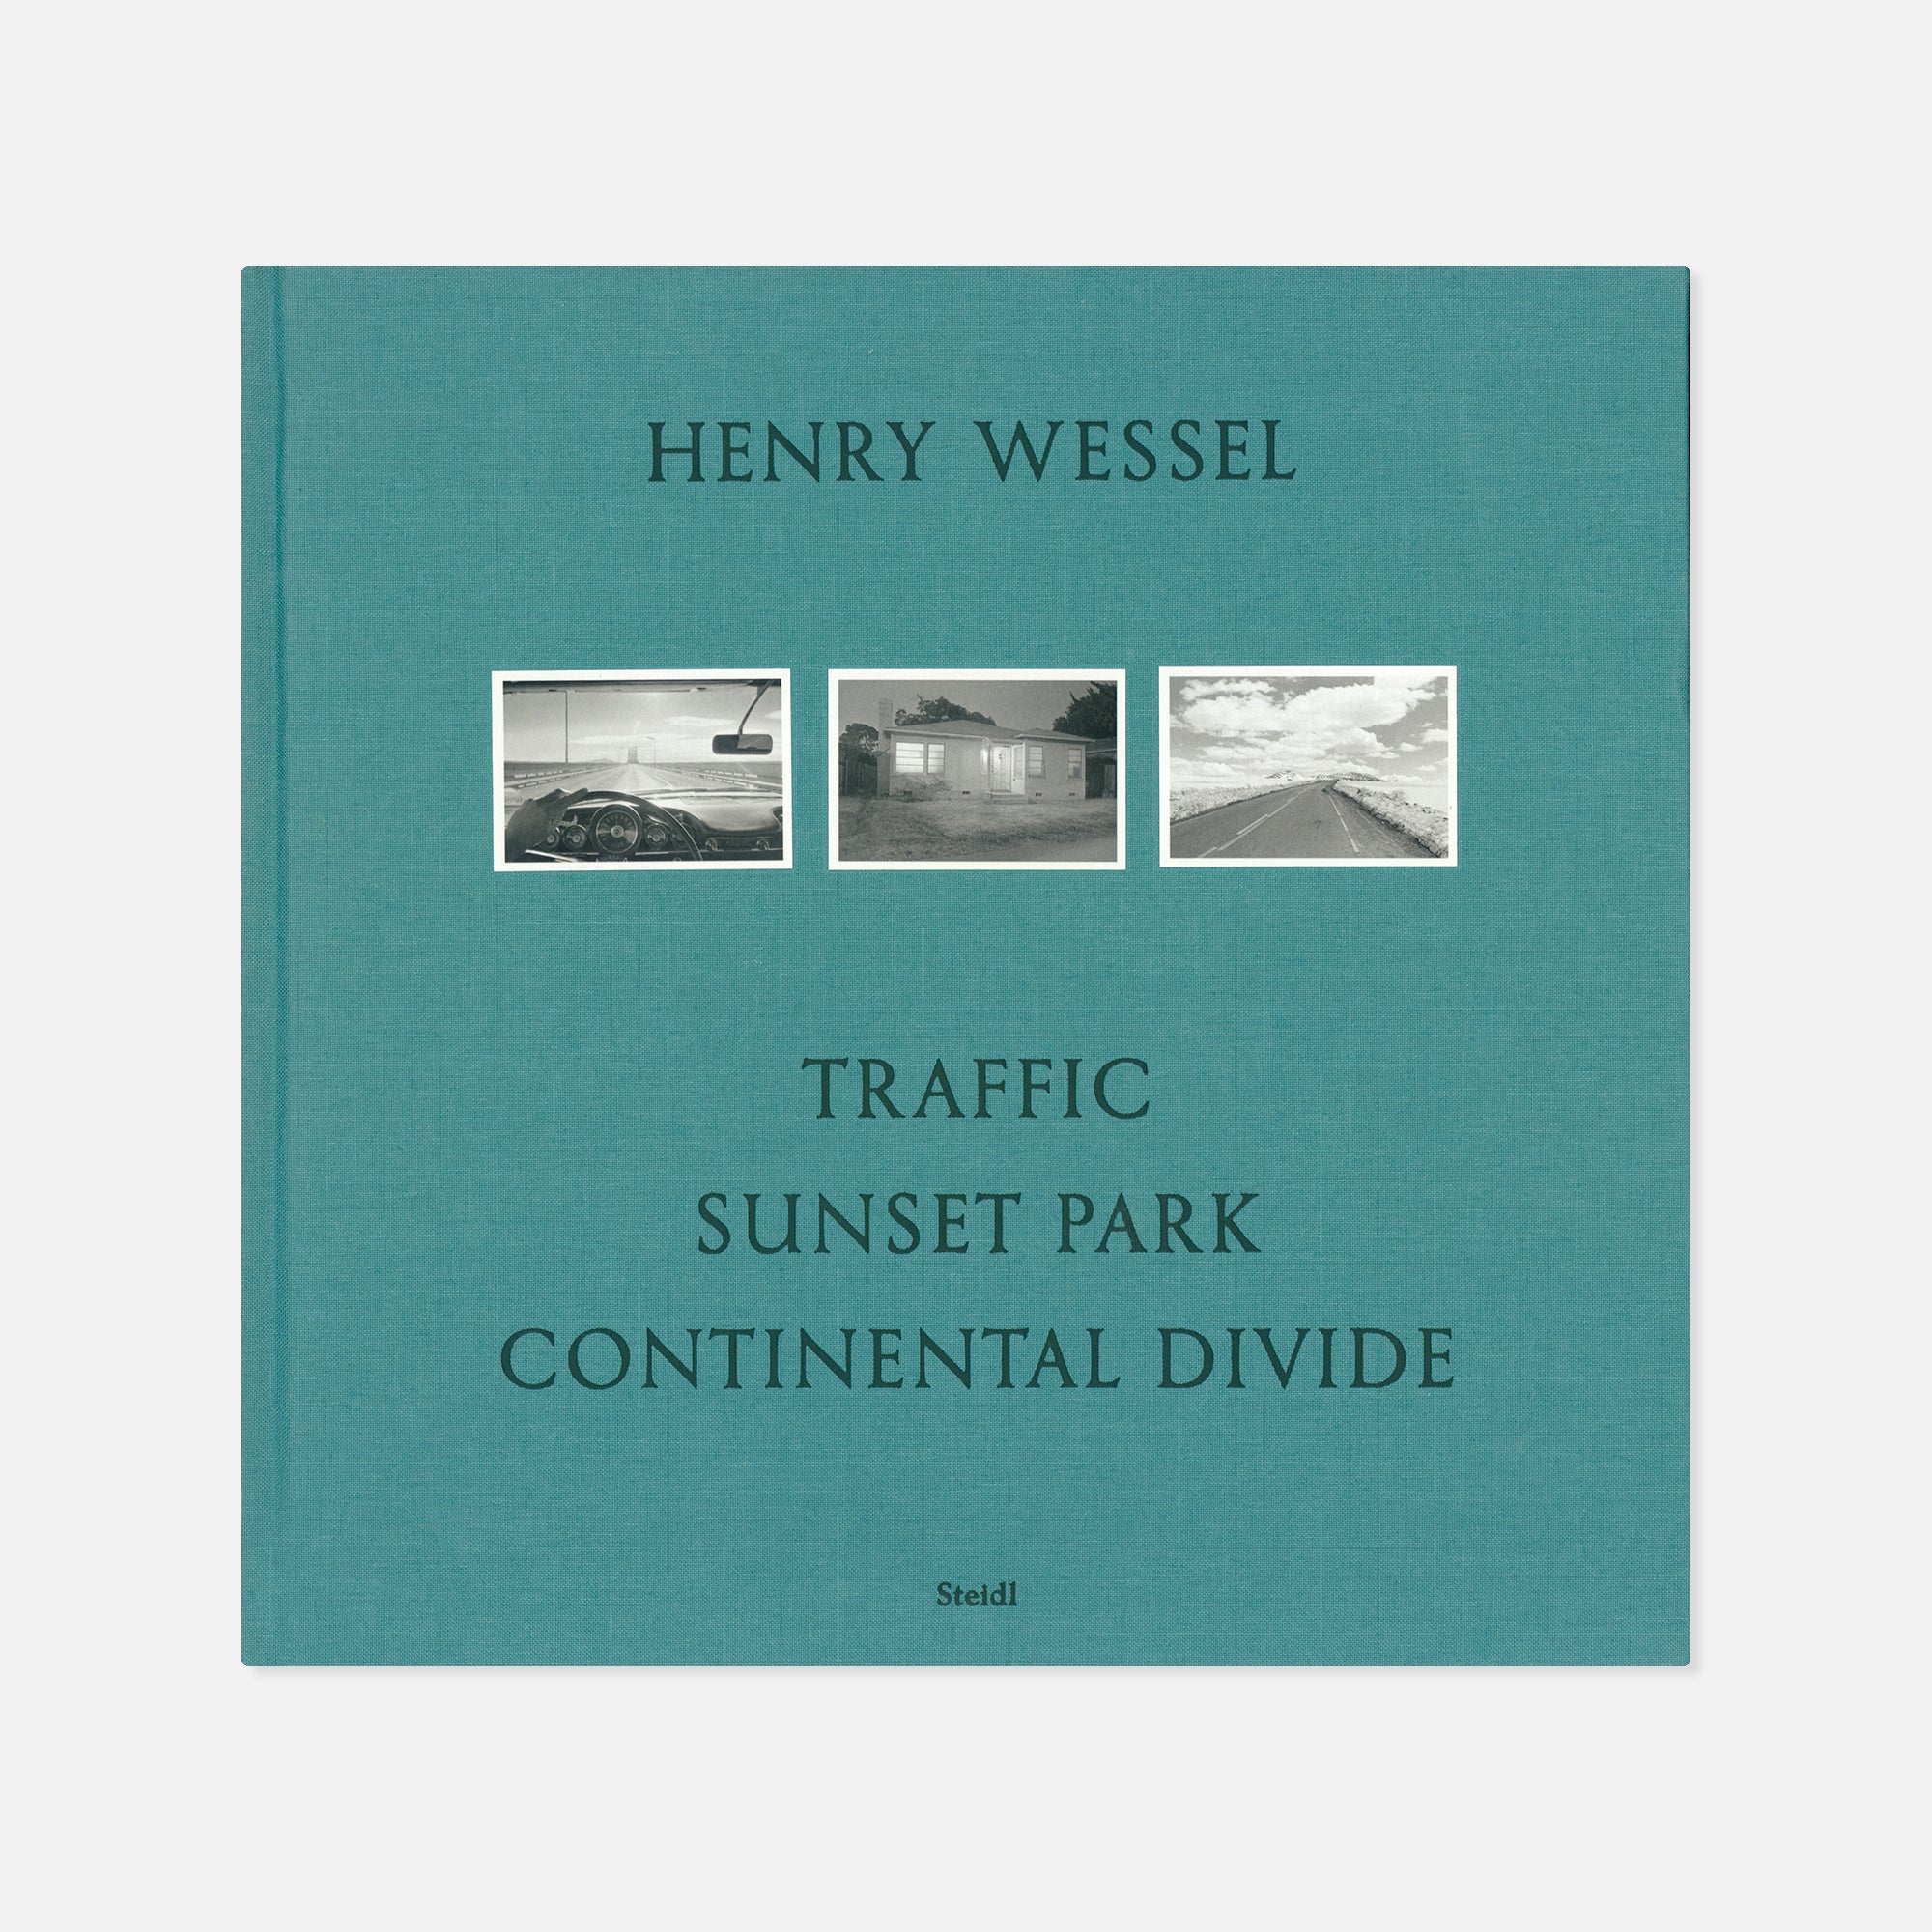 Henry Wessel — Traffic, Sunset Park, Continental Divide